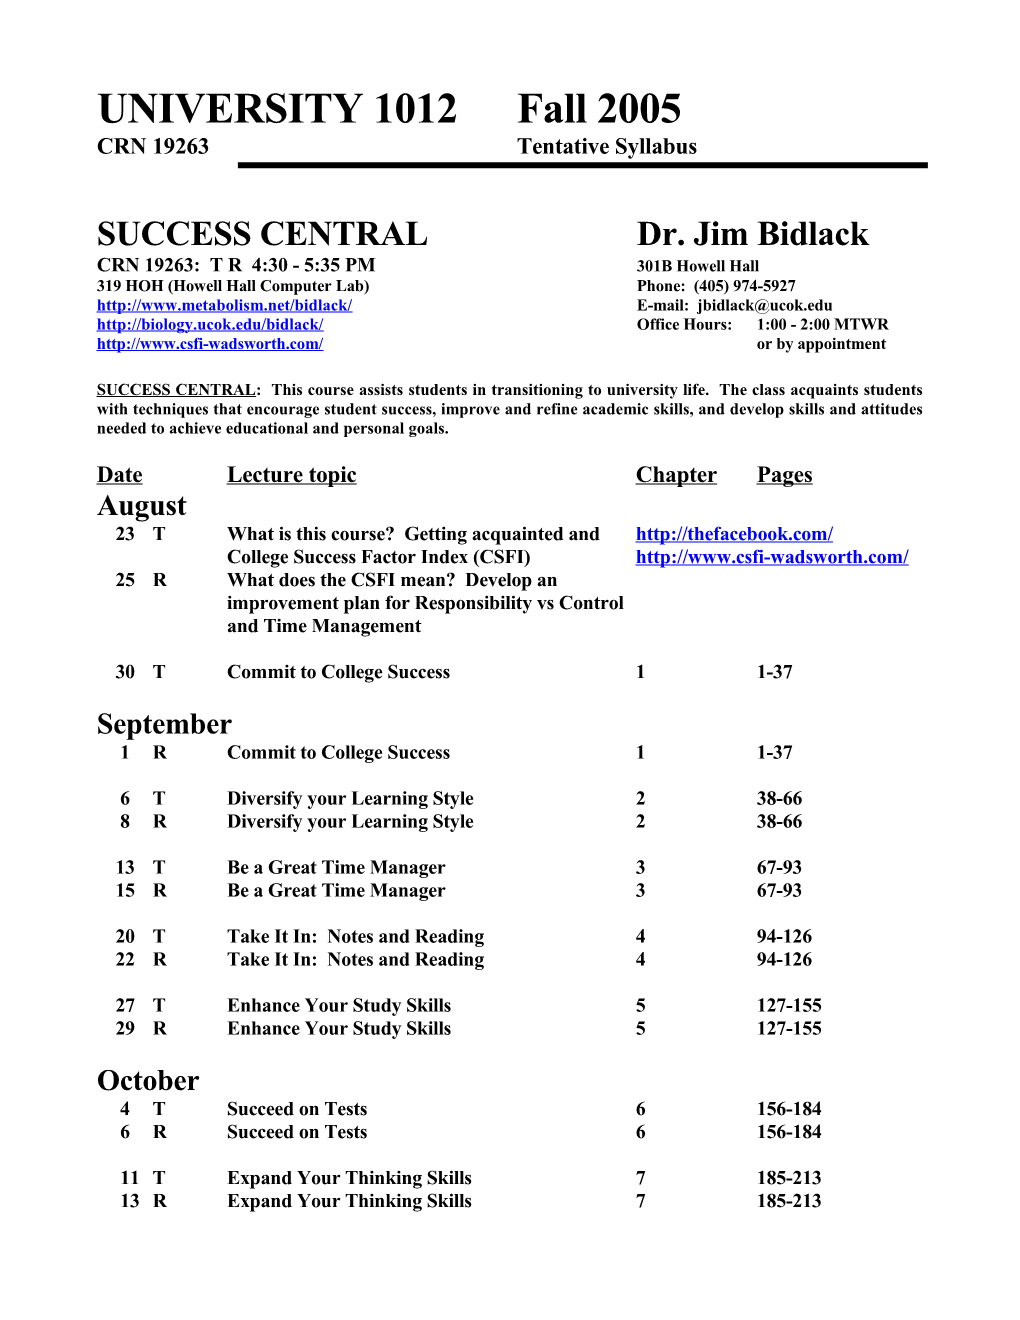 SUCCESS Centraldr. Jim Bidlack